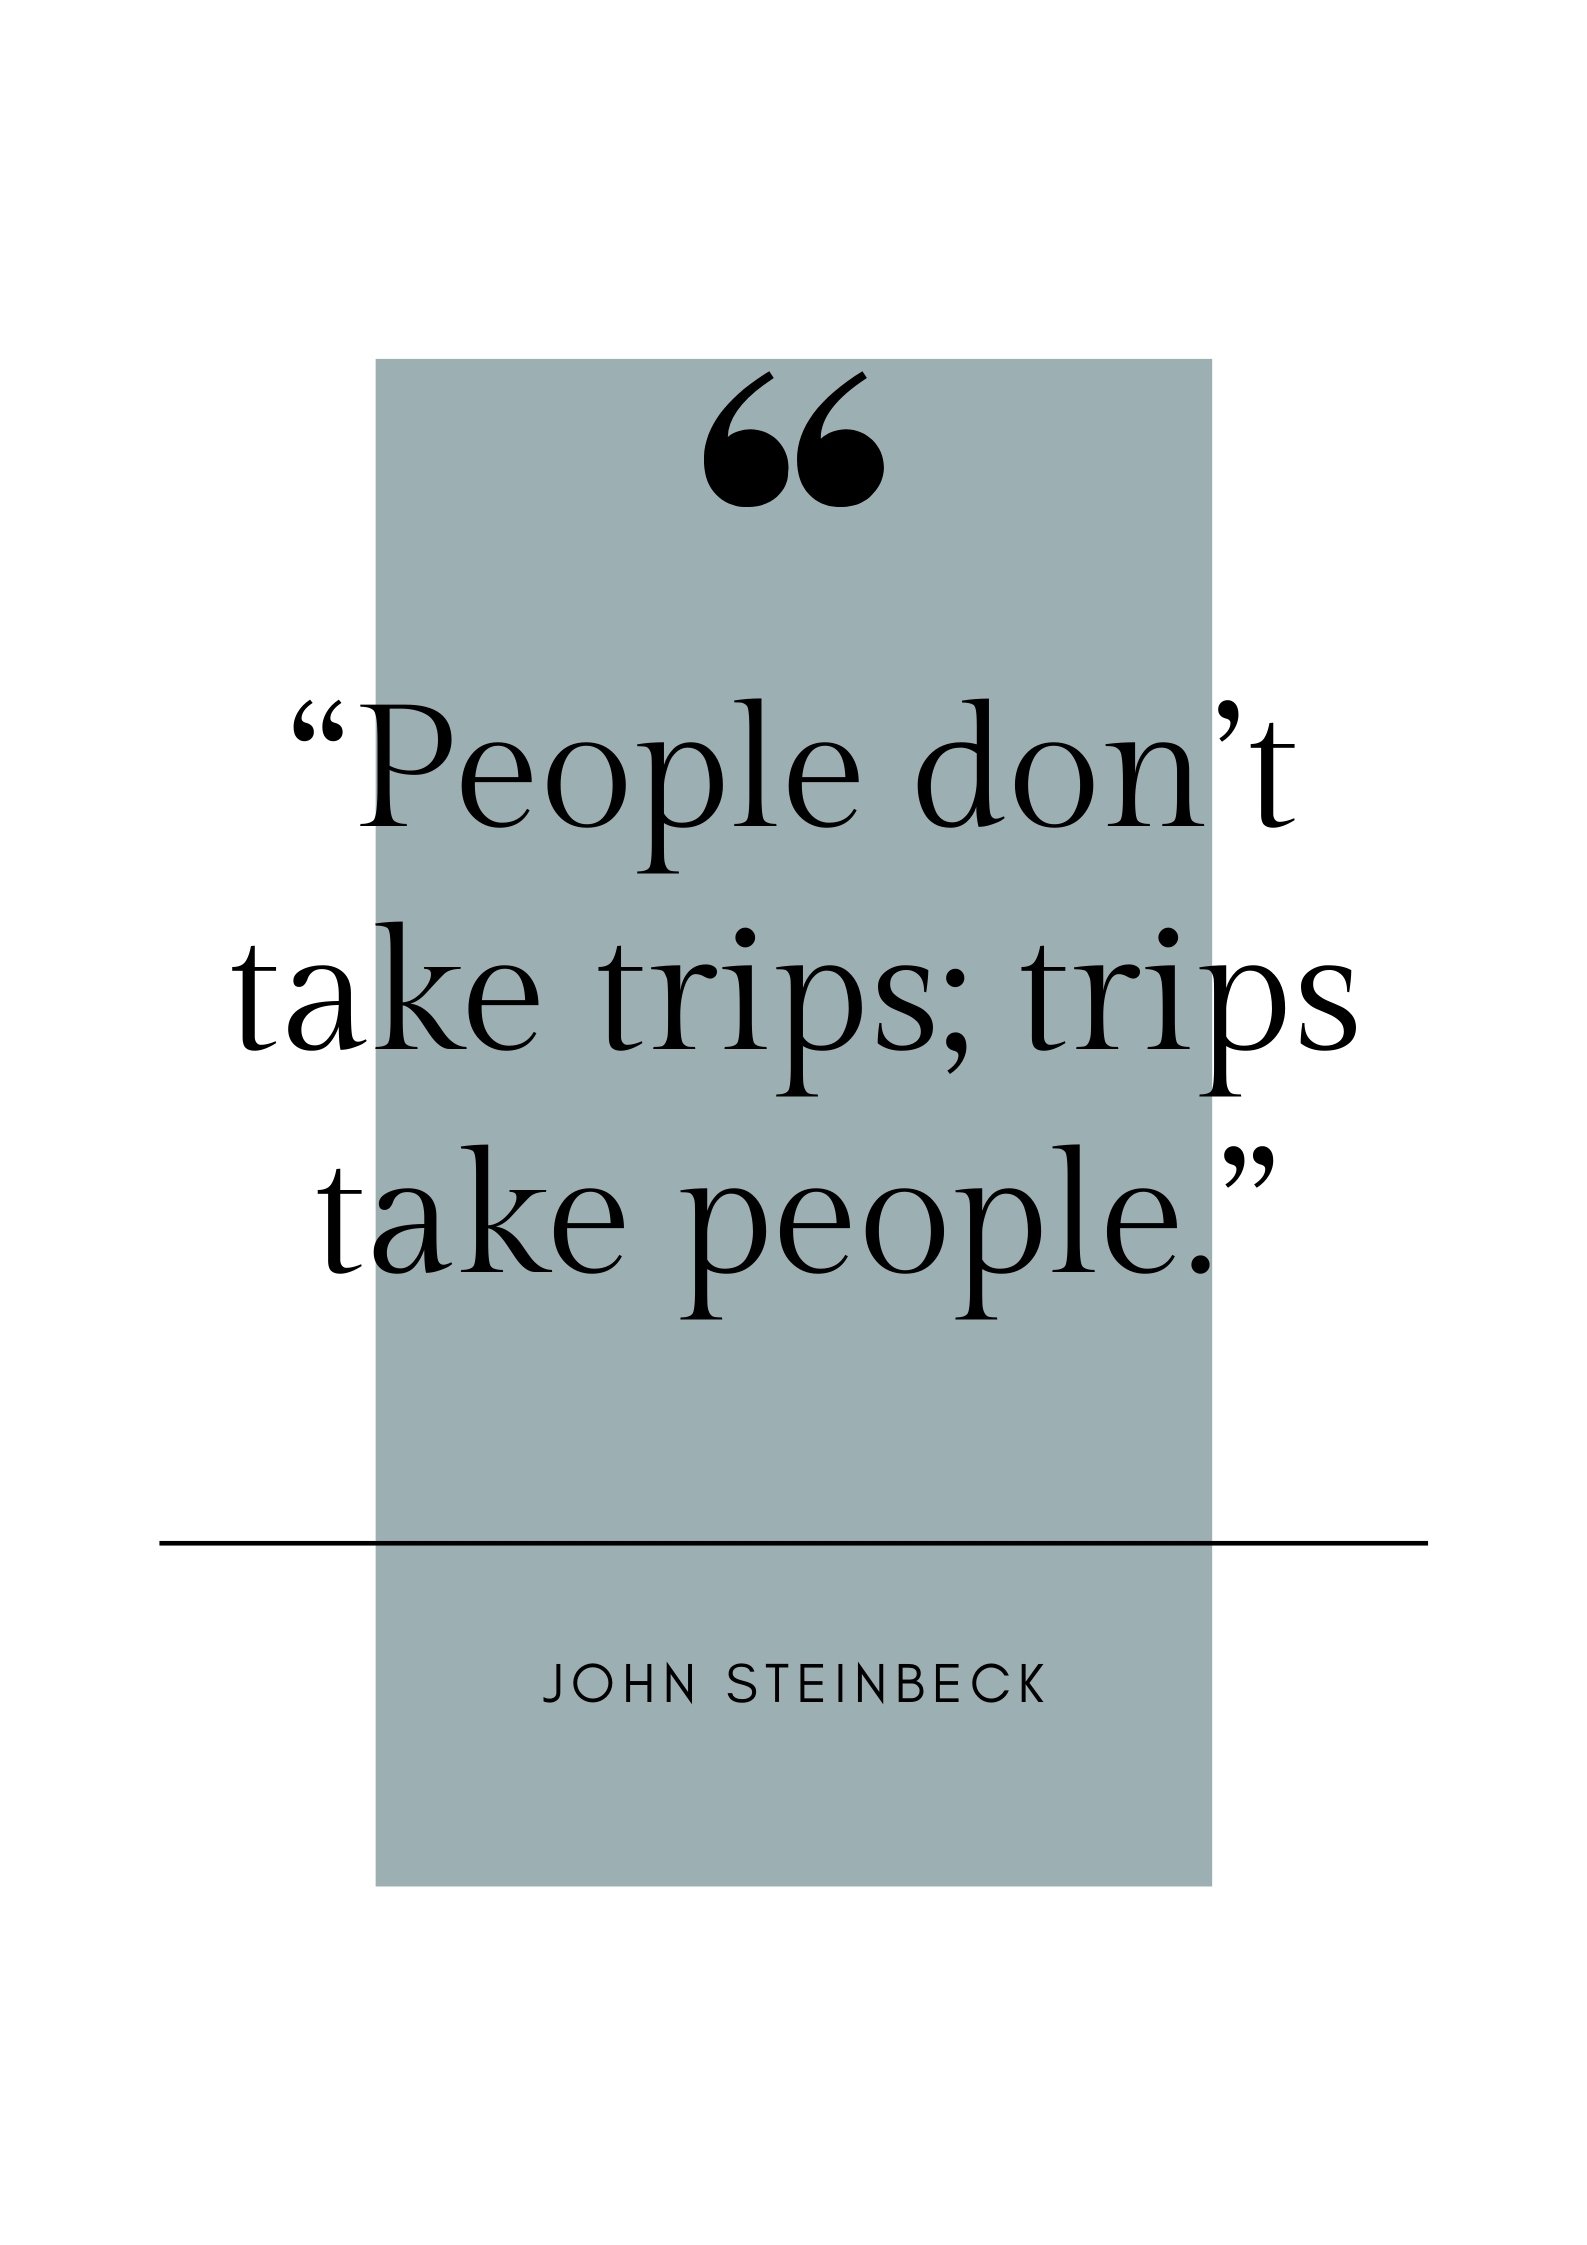 john steinbeck quote